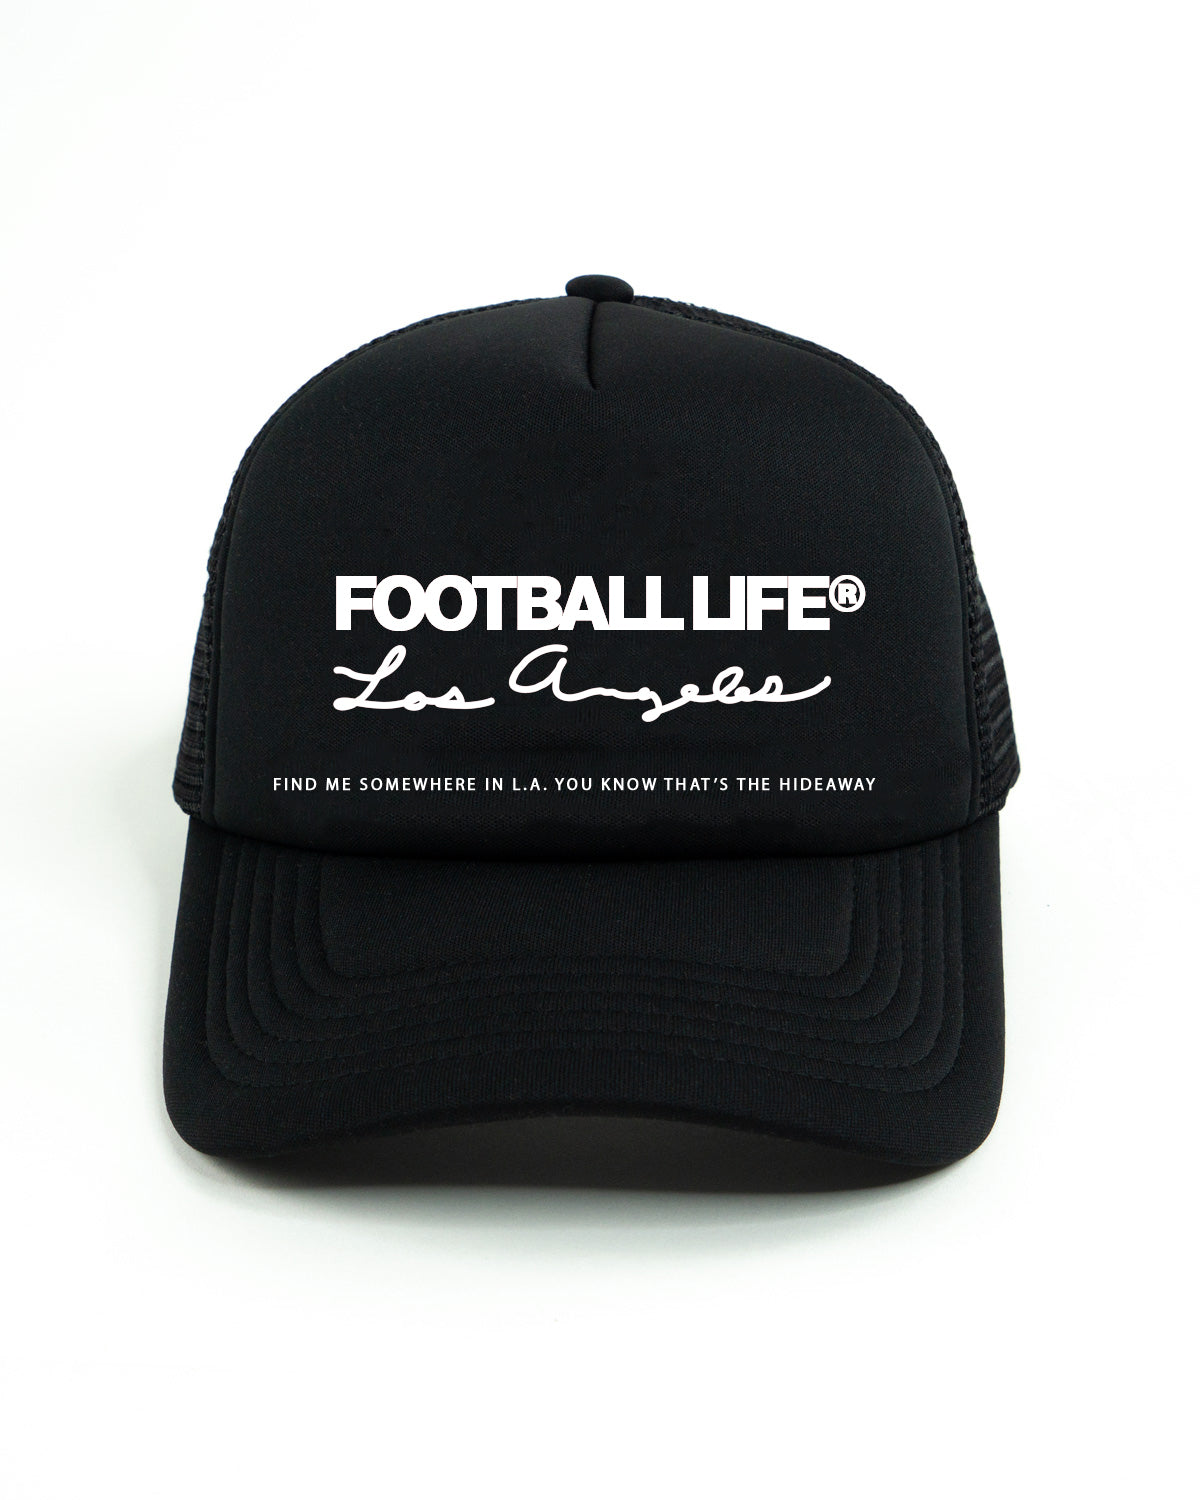 Football Life® Los Angeles Hideaway Trucker Hat